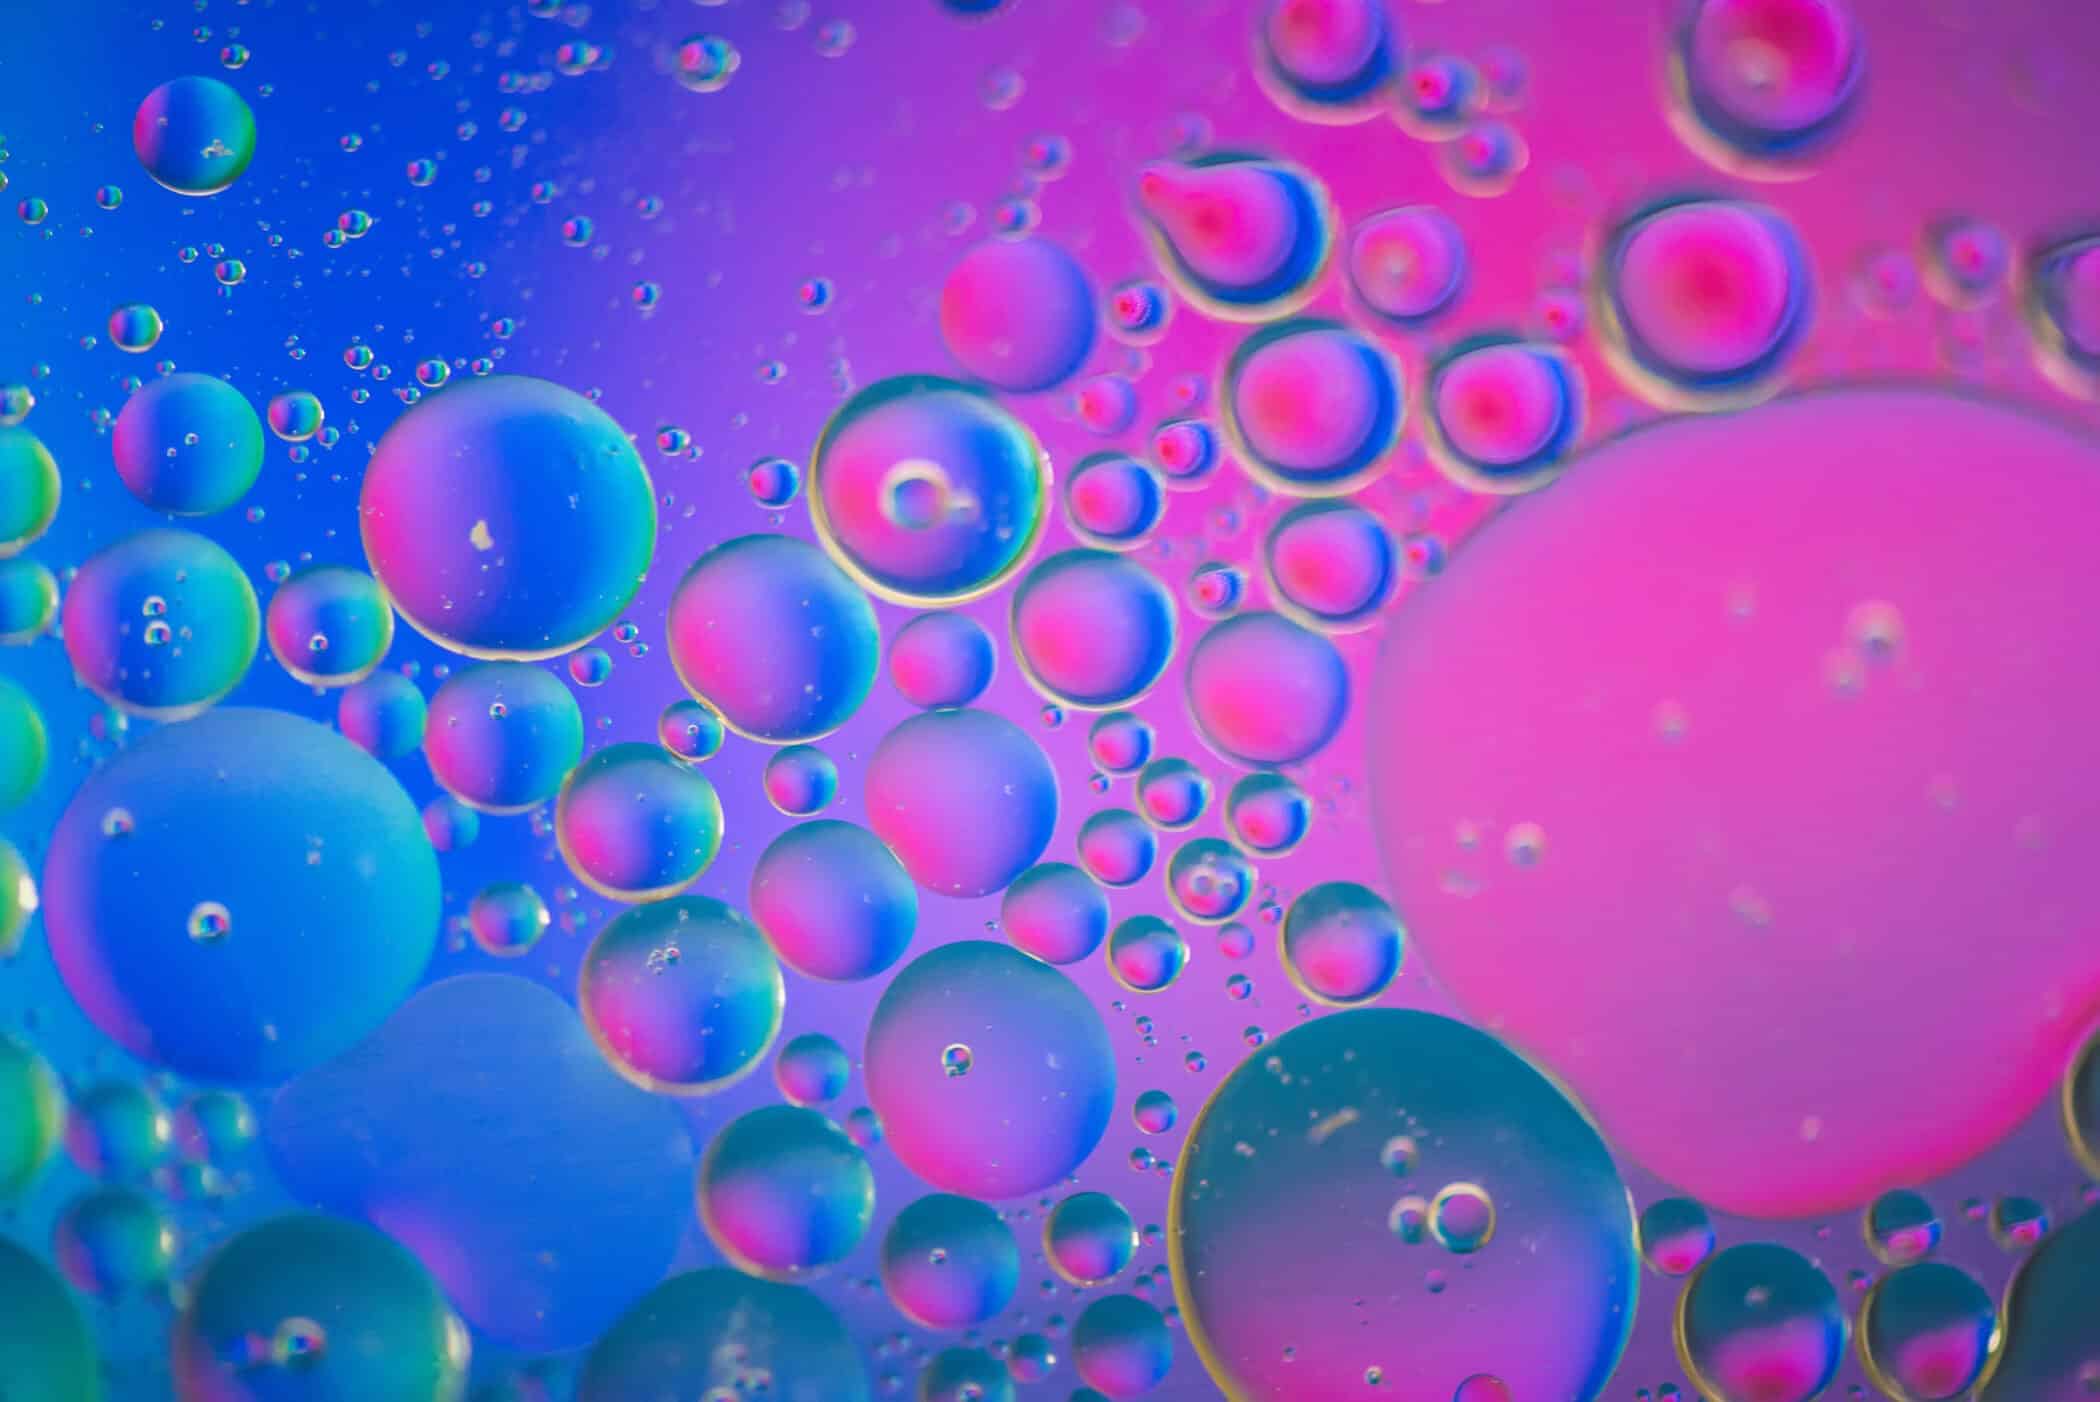 atom bubble